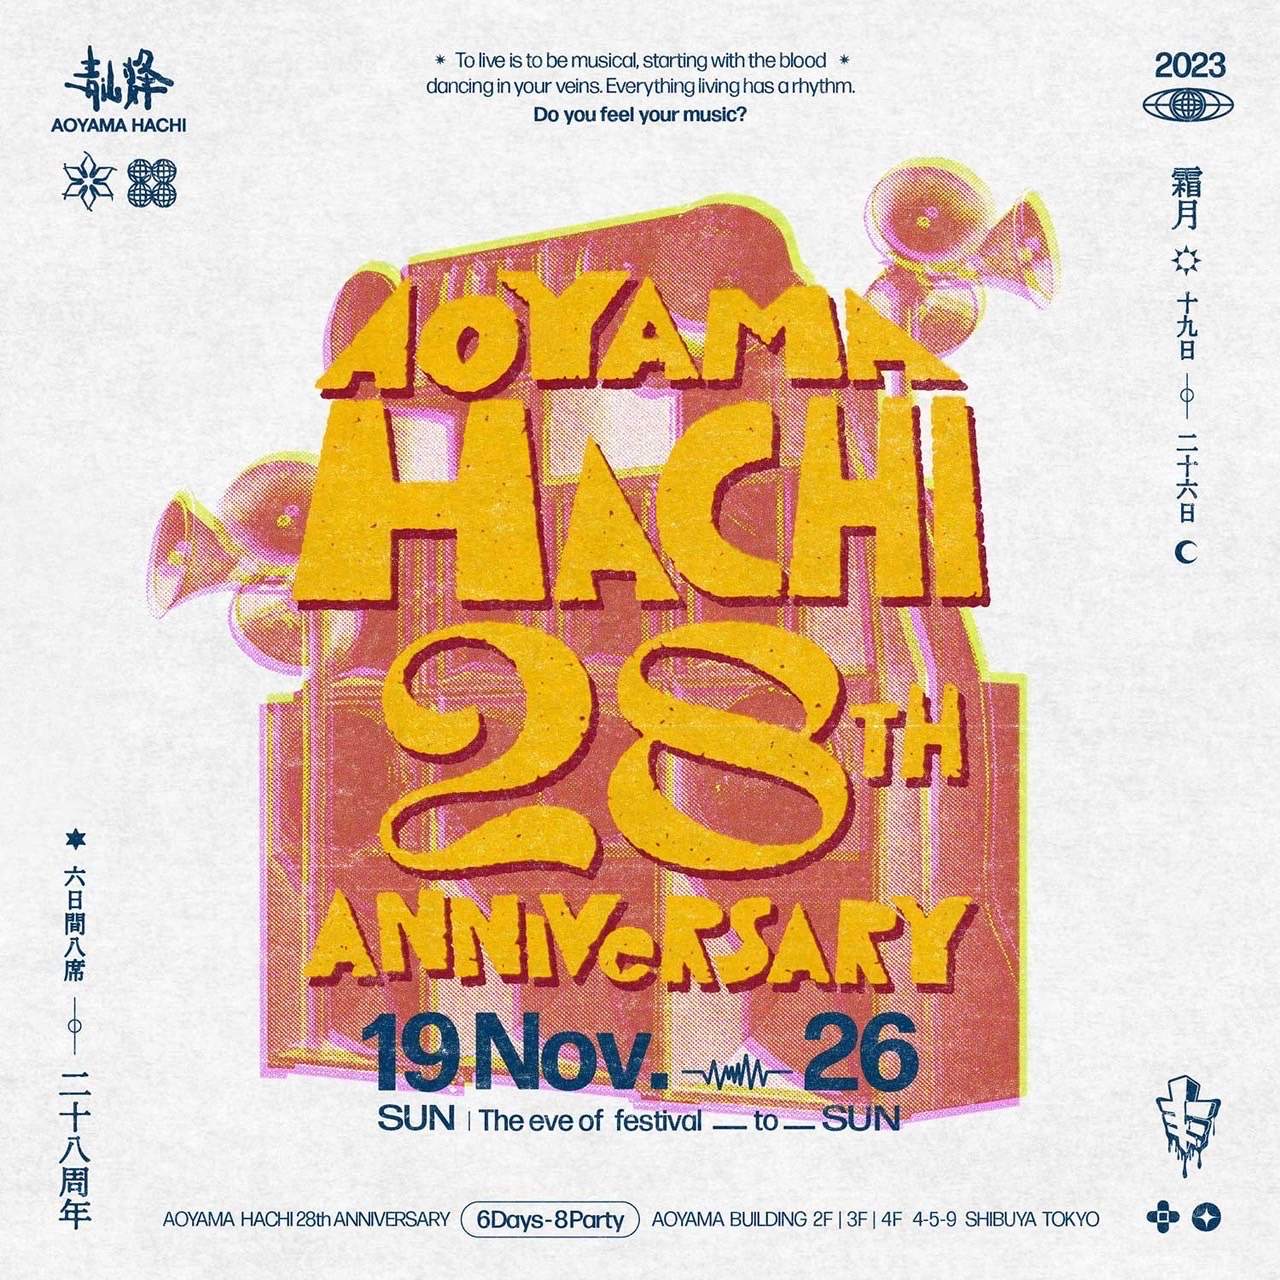 Aoyama Hachi 28th Anniversary 前夜祭 -PAYBACK! 16th Anniversary- - フライヤー表